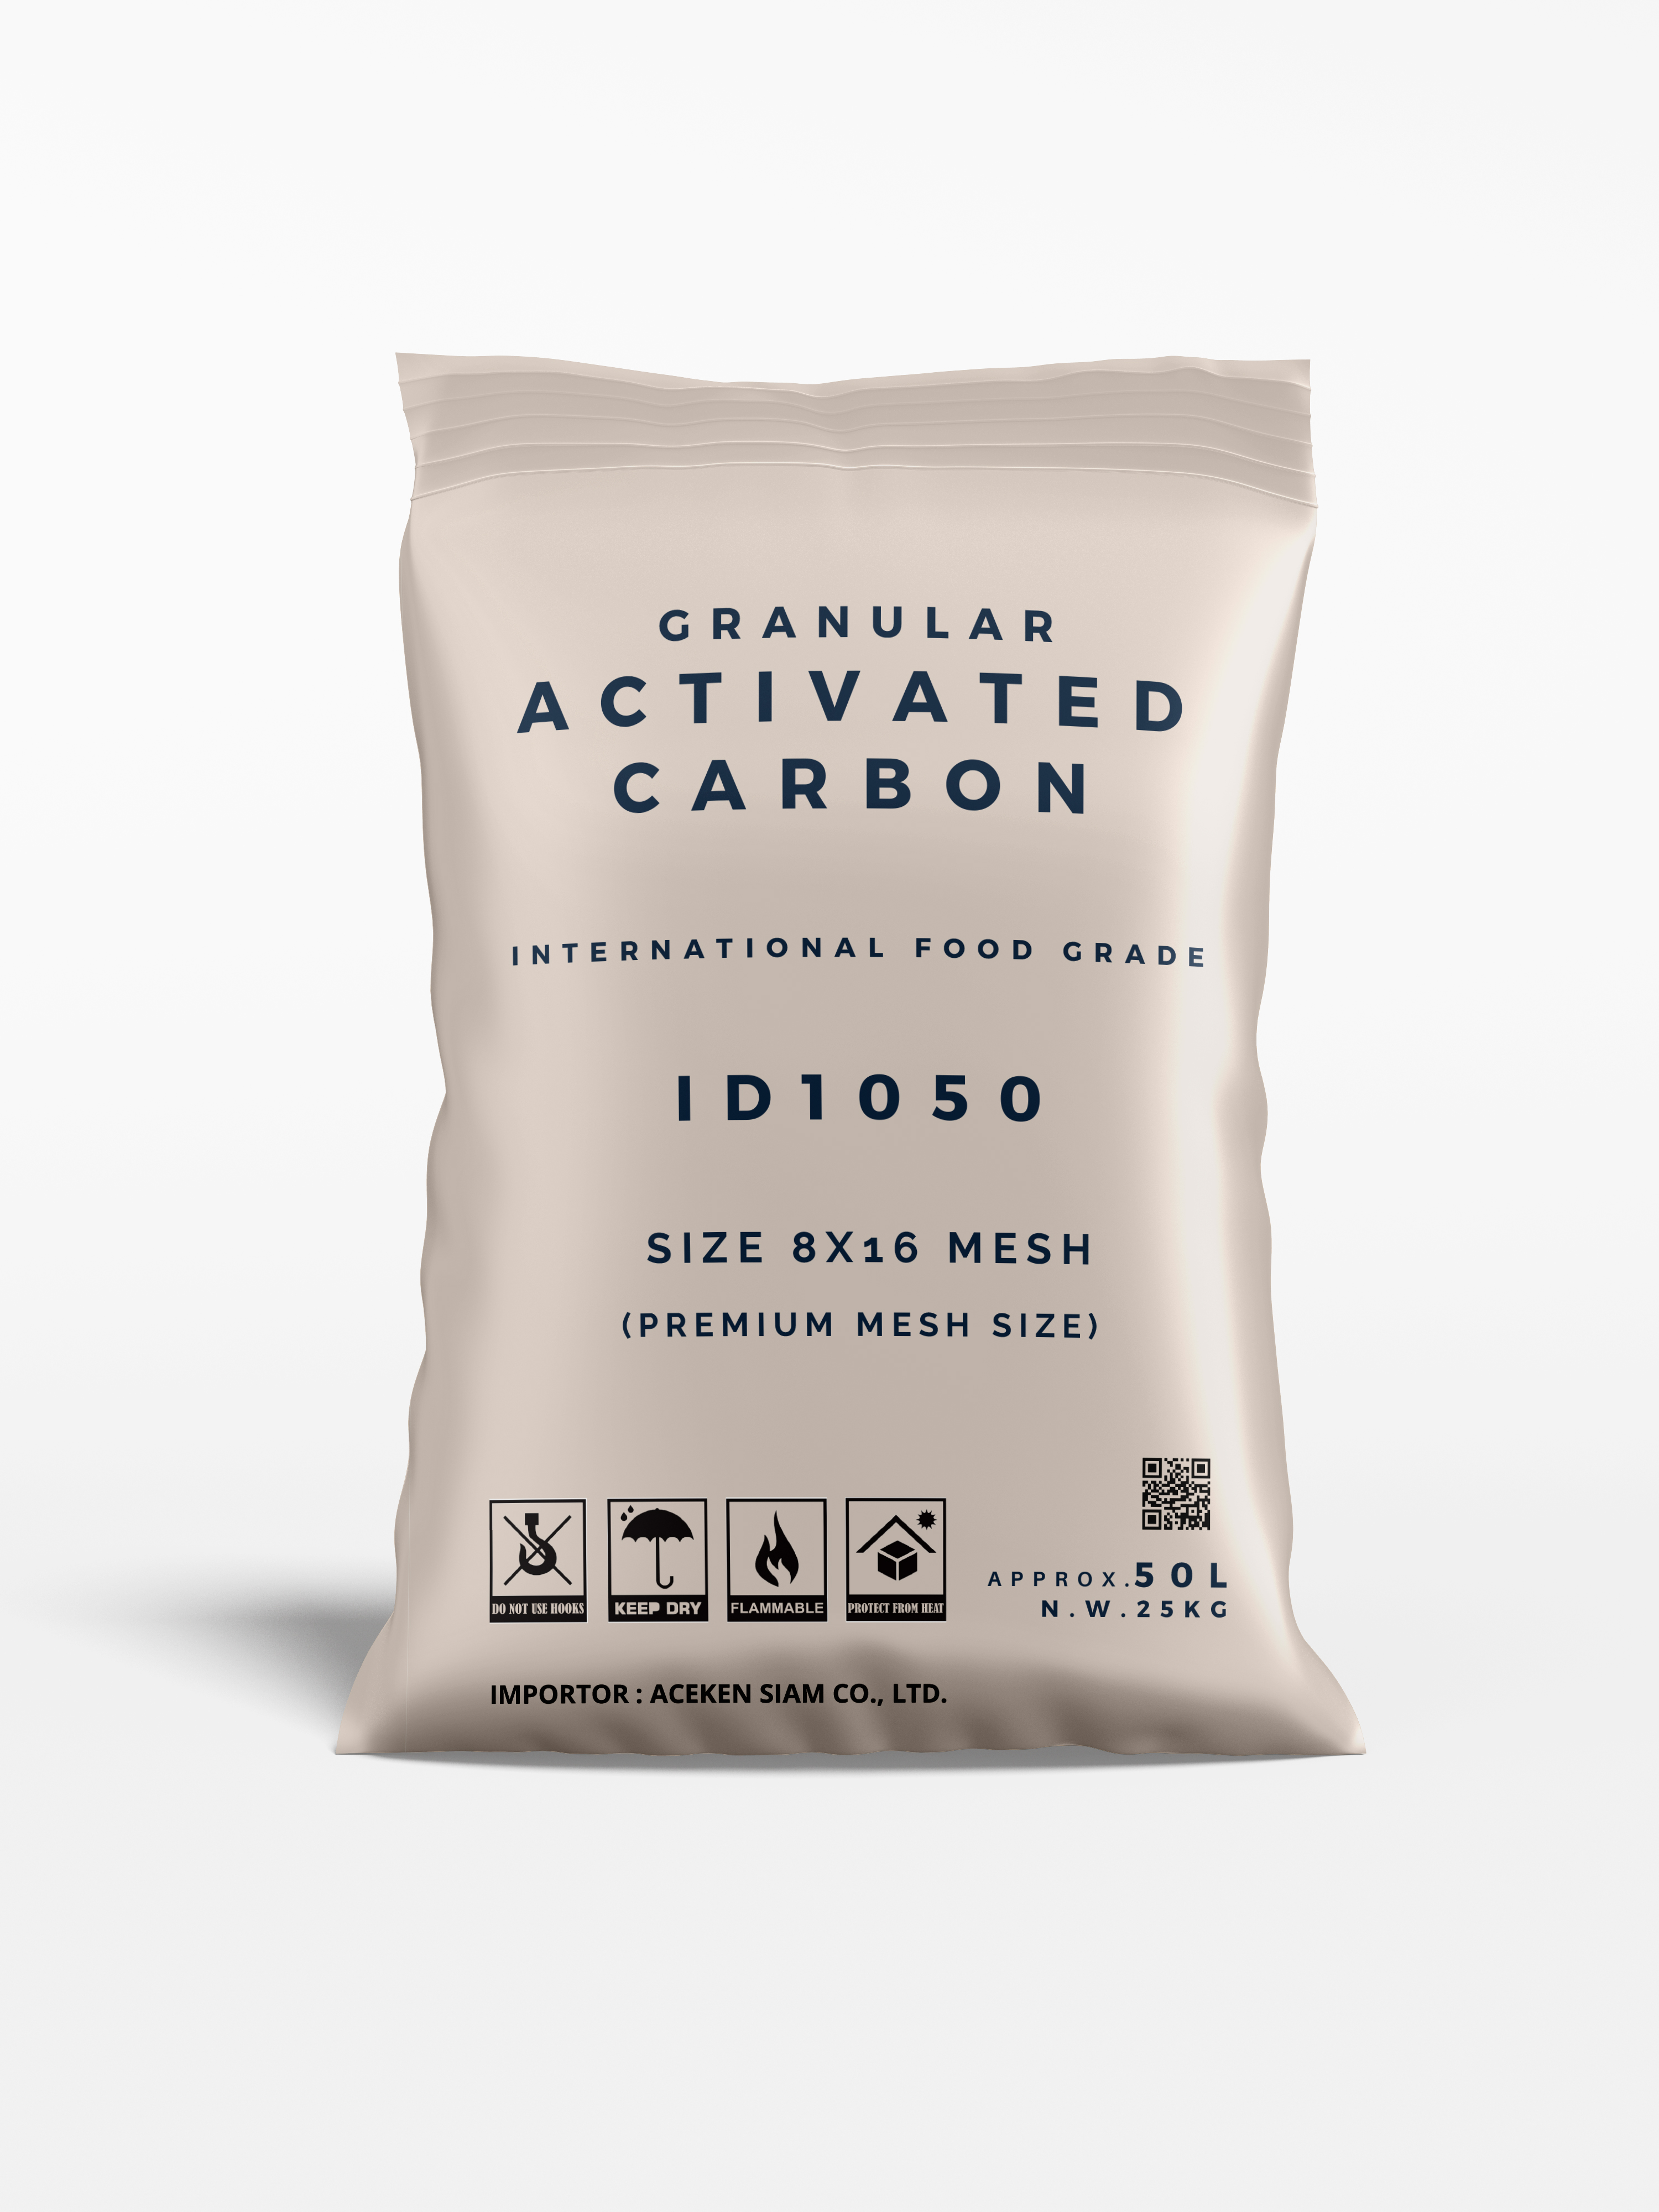 Granular Activated Carbon ID1050 International Food Grade